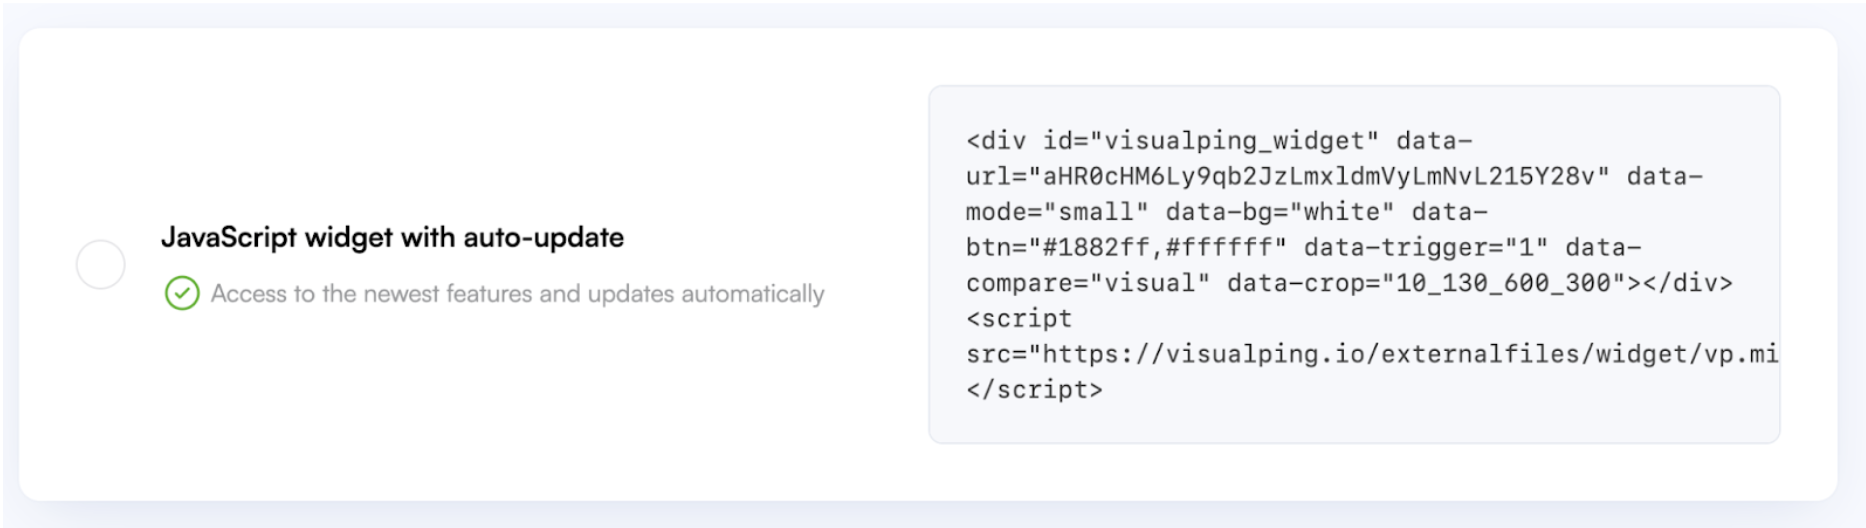 Code for JavaScript widget in Visualping